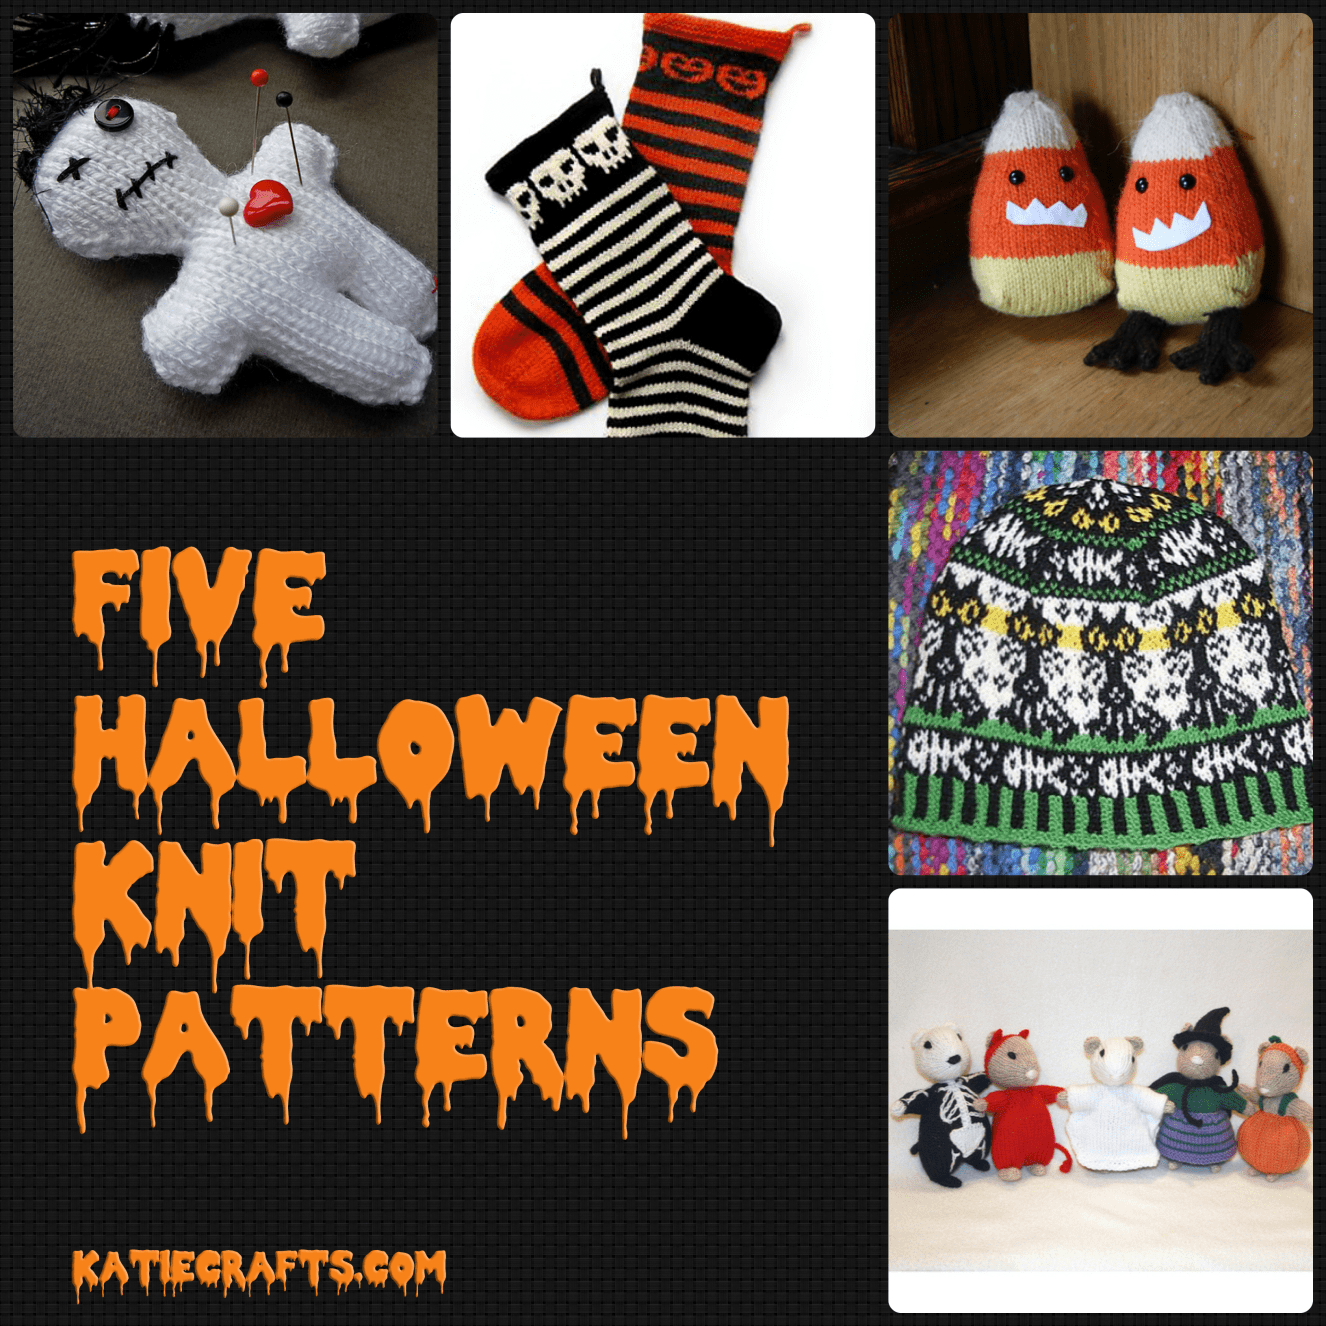 Five Halloween Knit Patterns on Katie Crafts; https://www.katiecrafts.com